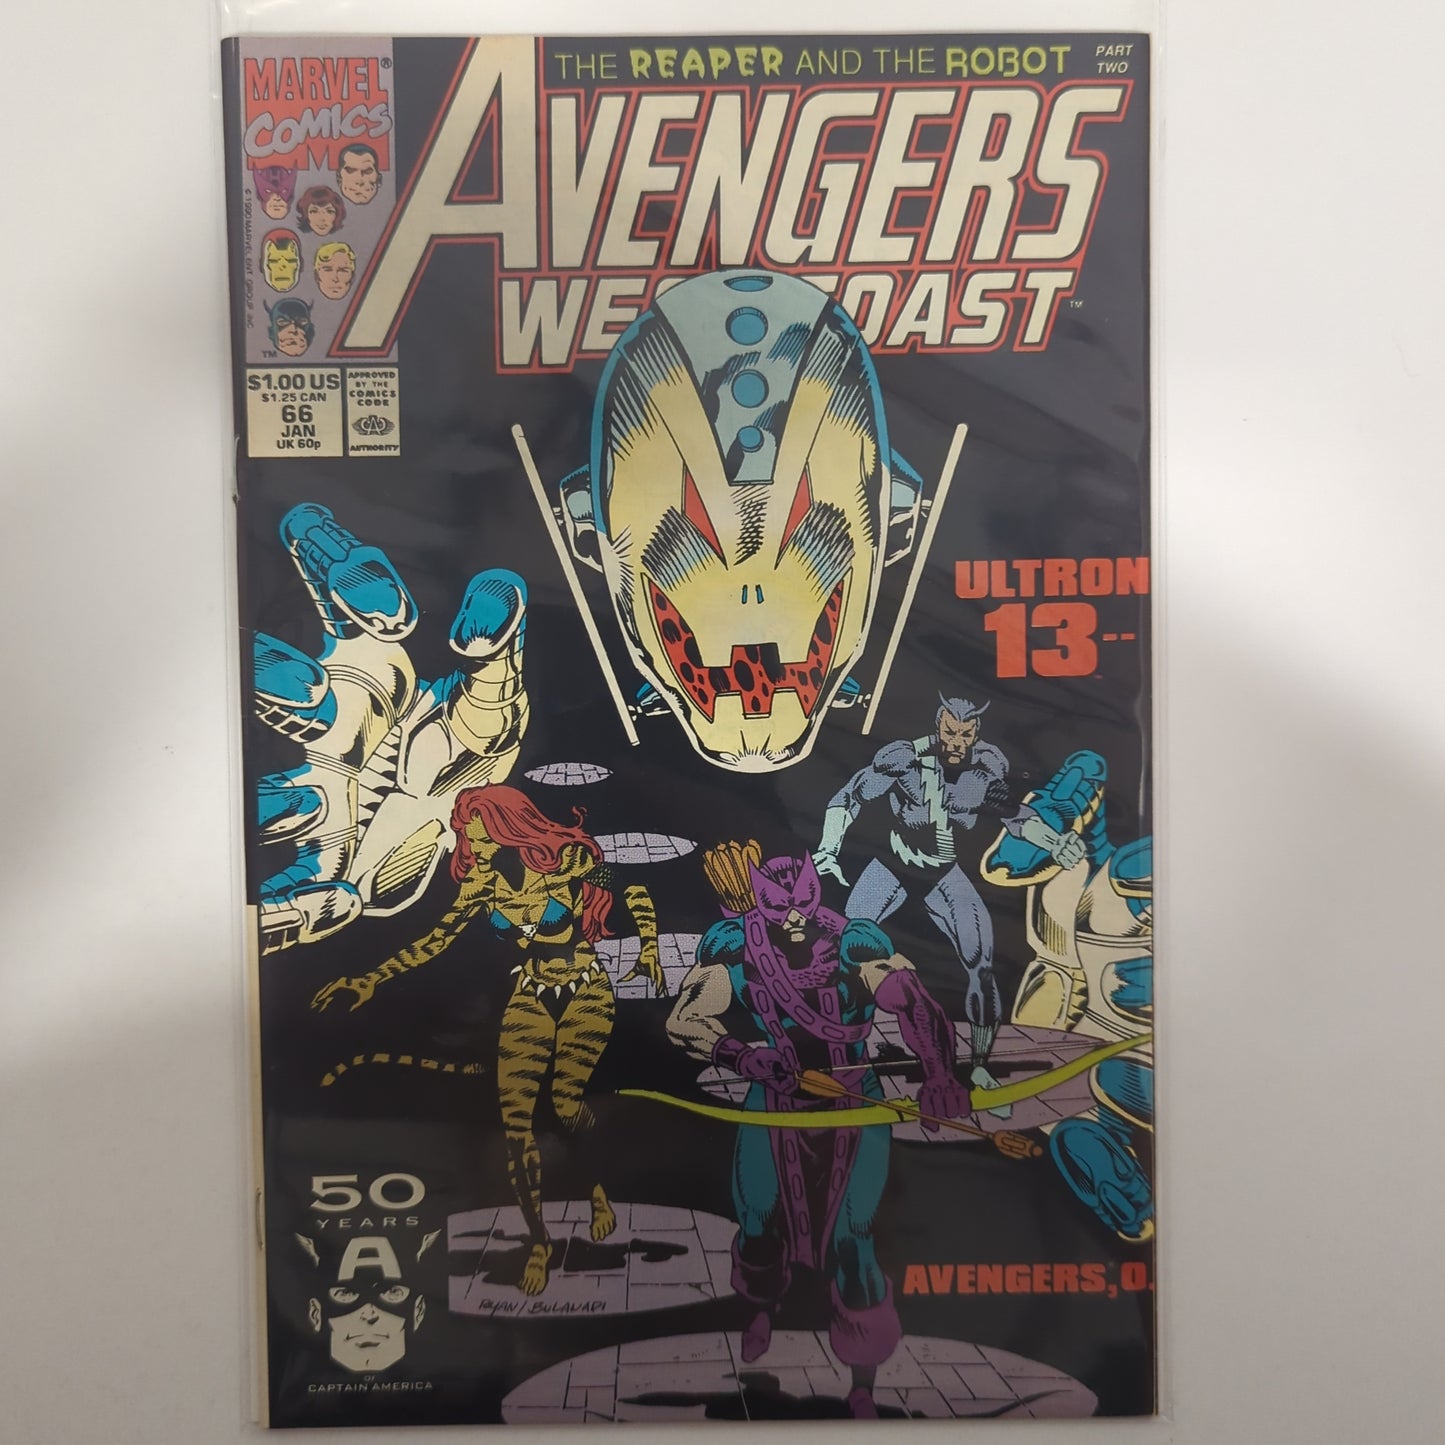 The West Coast Avengers #66